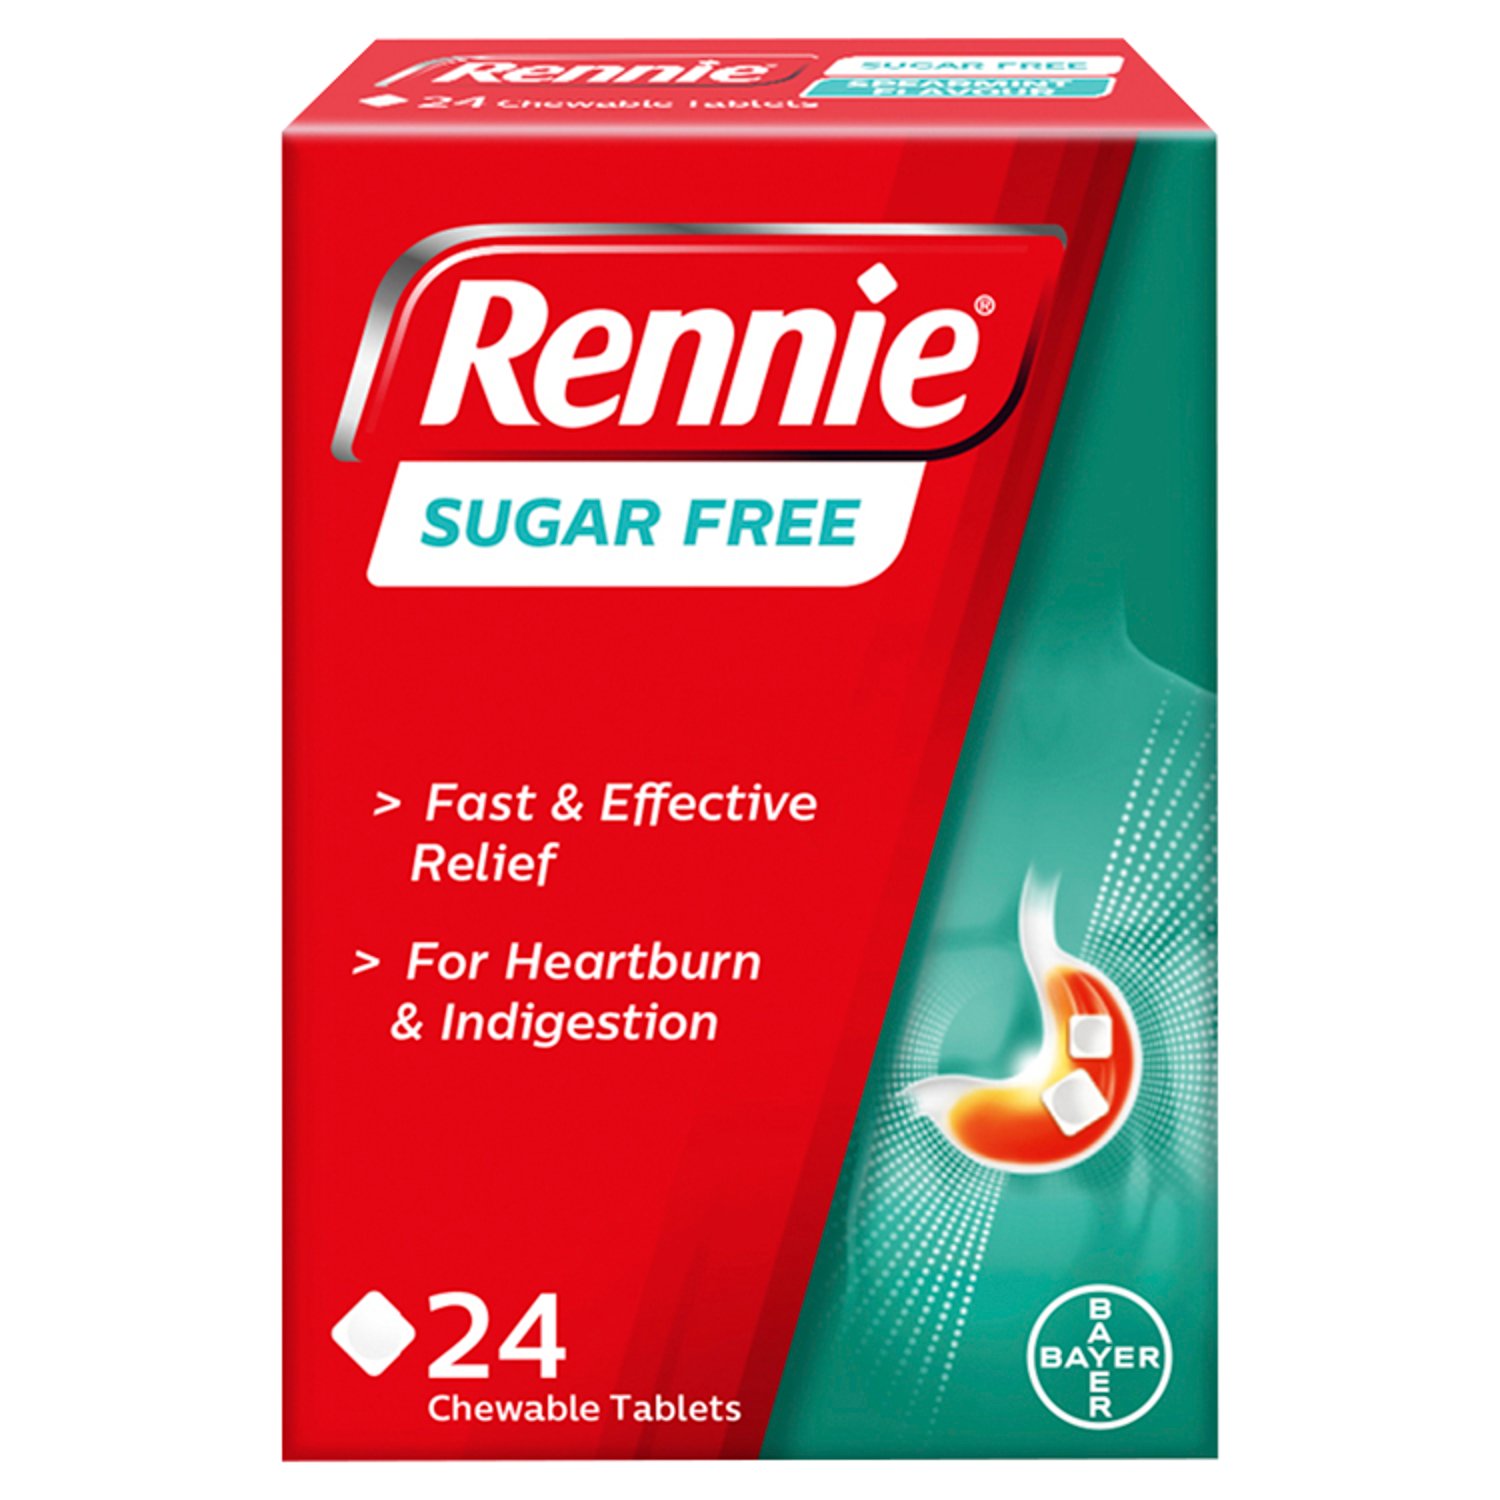 Rennie Sugar Free Chewable Tablets (24 Piece)